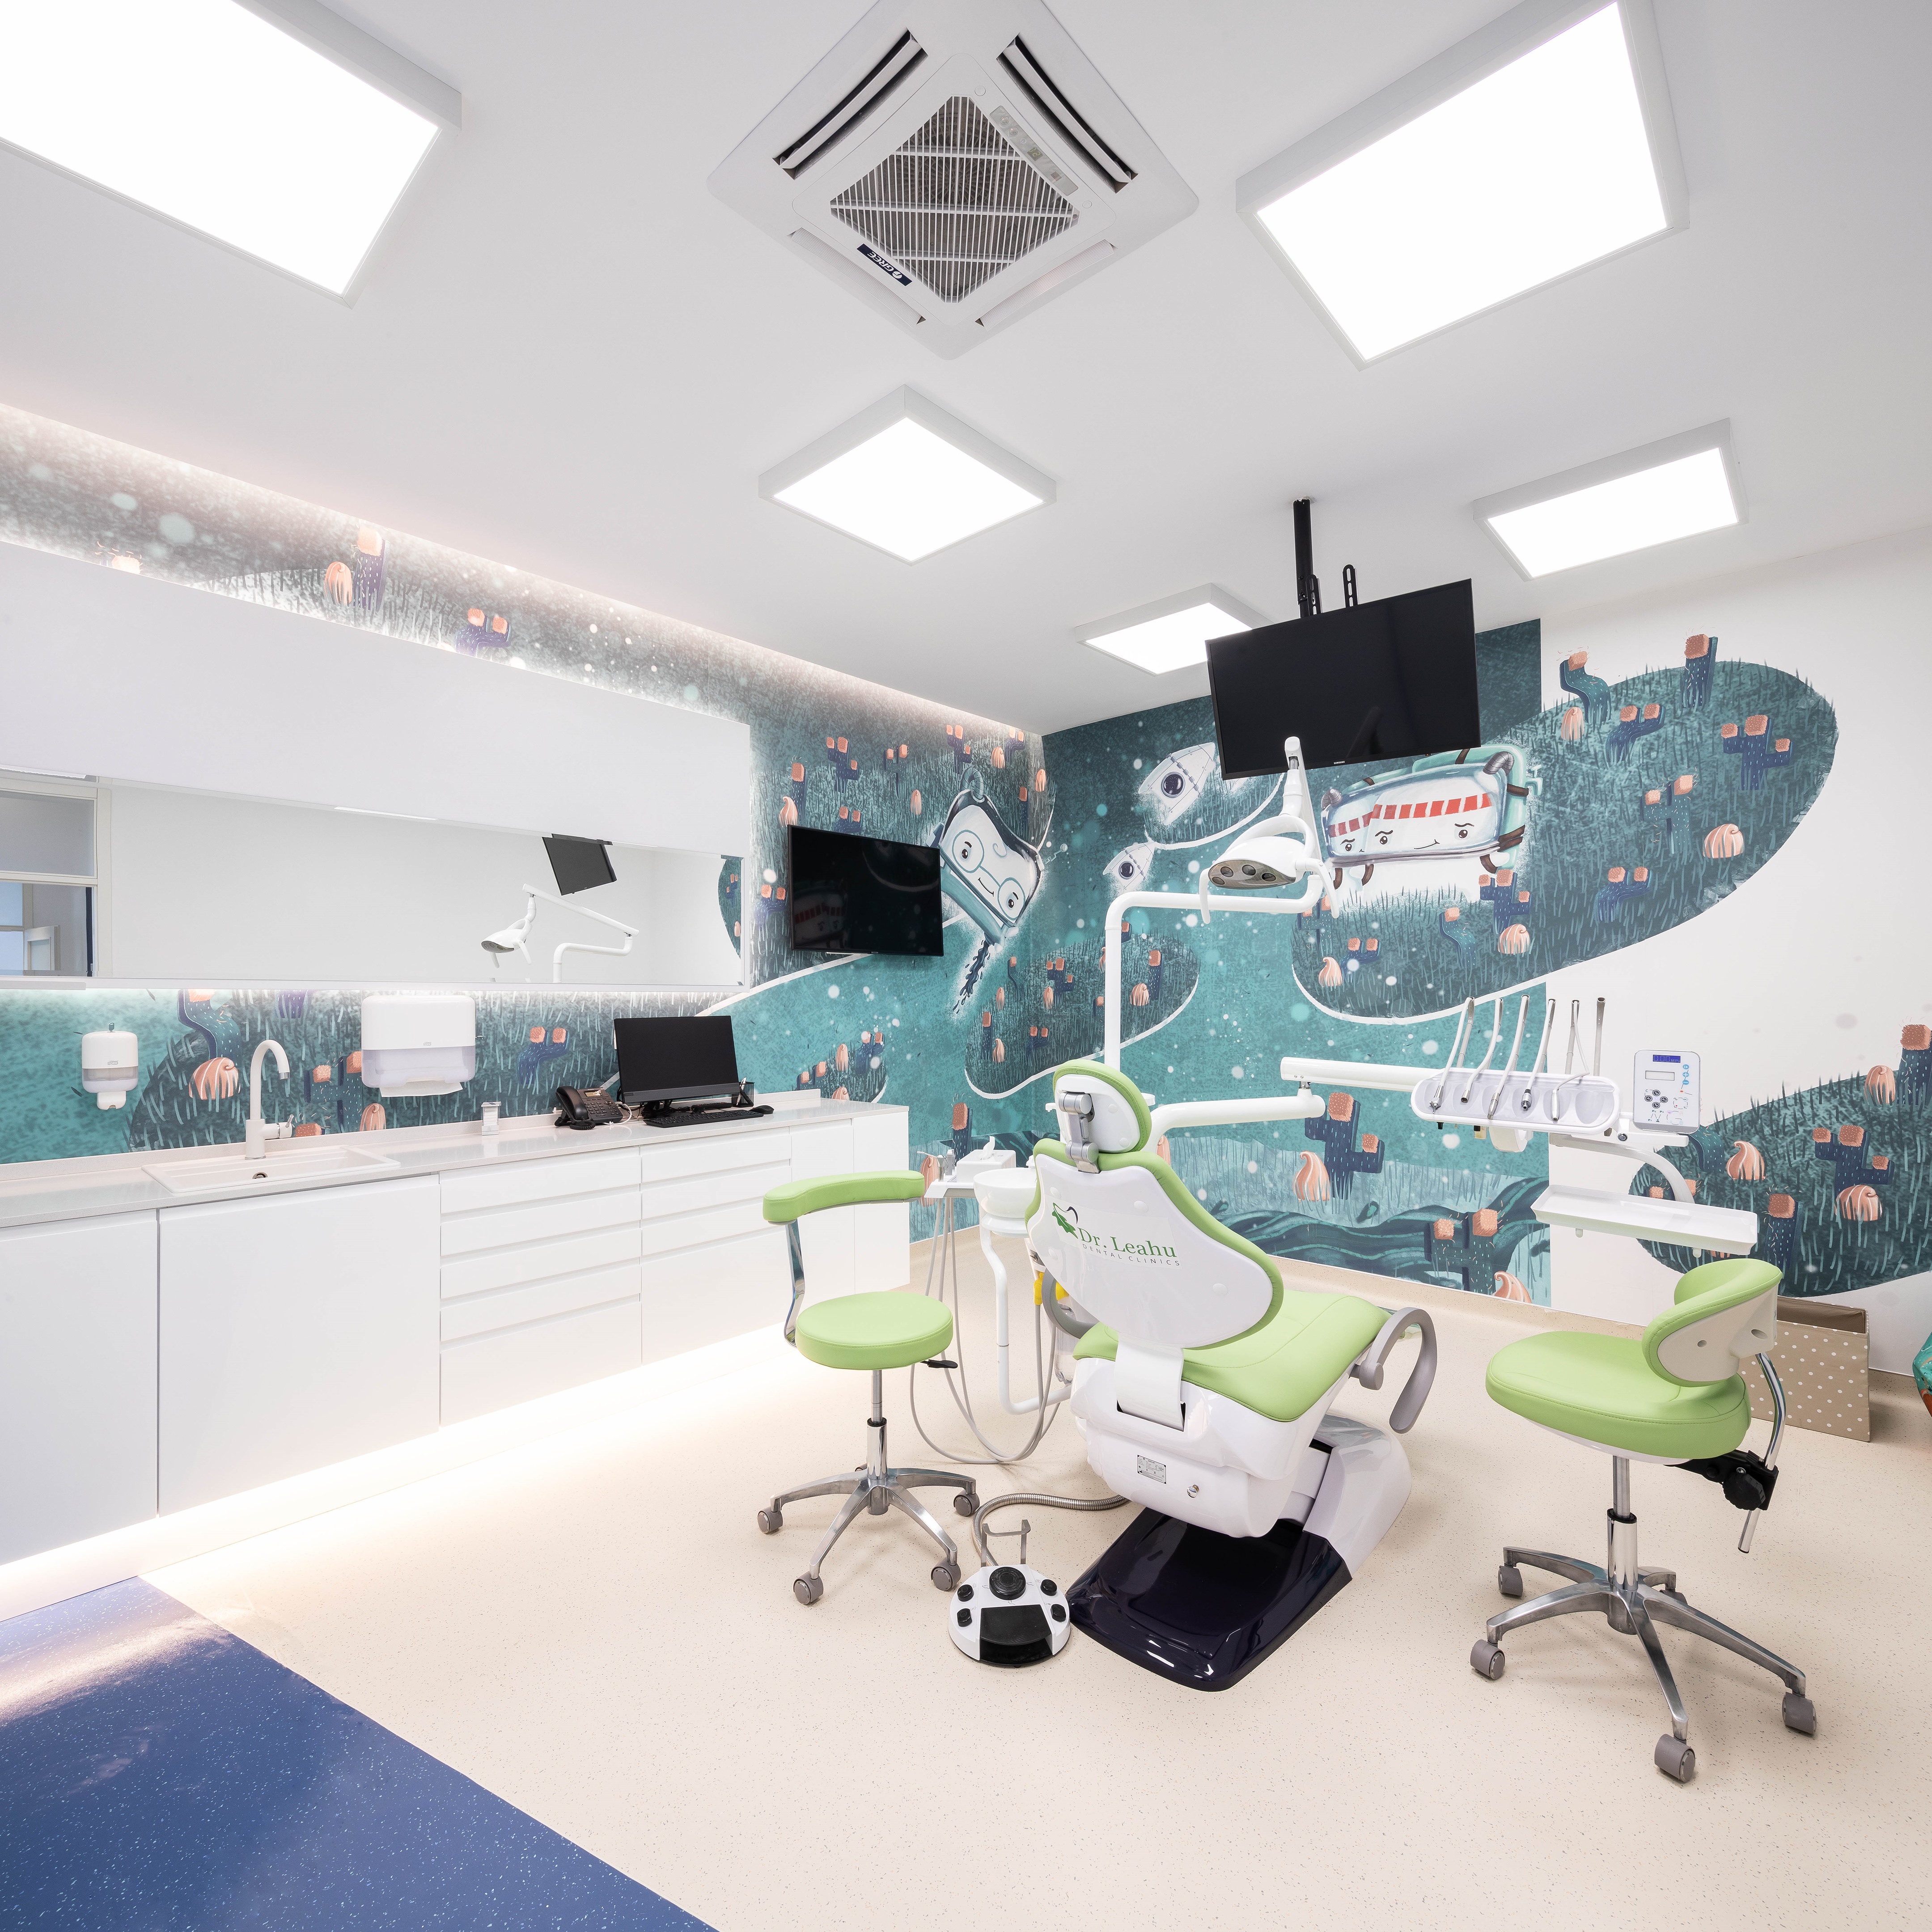 Dr. Leahu Dental Clinic-12